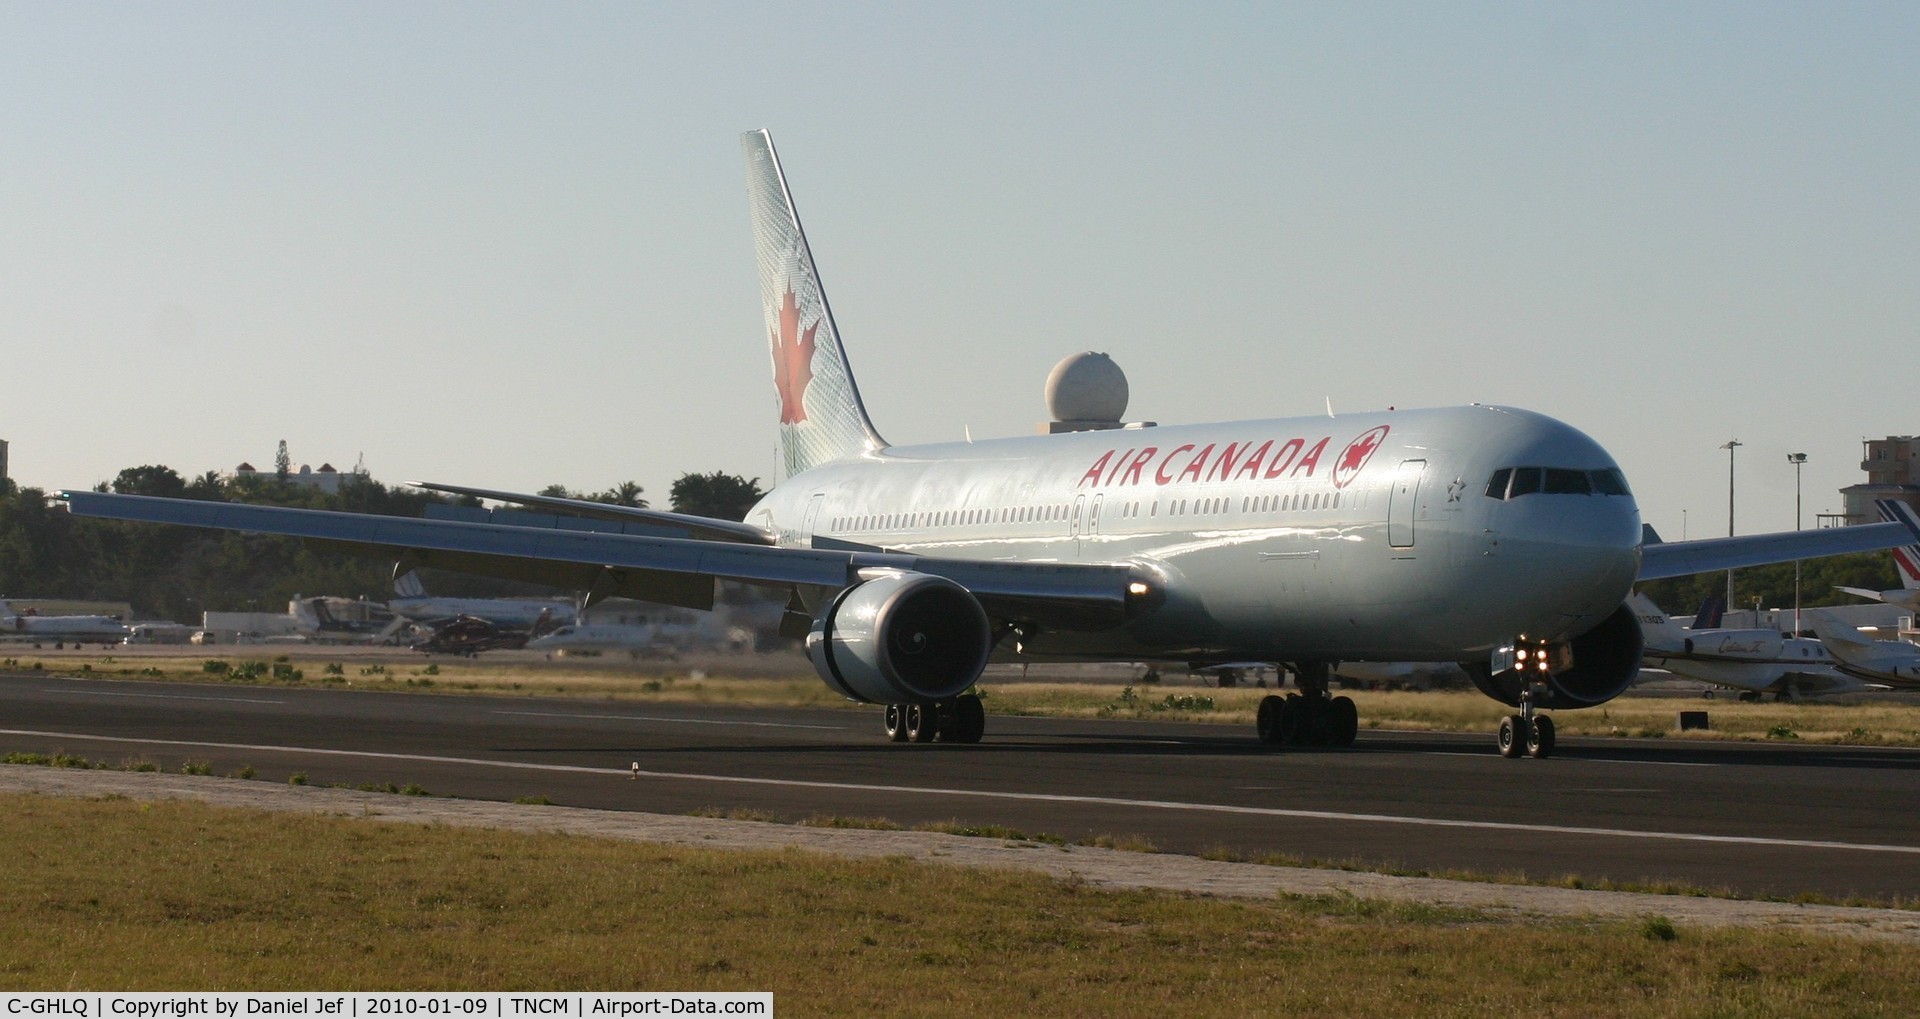 C-GHLQ, 2001 Boeing 767-333/ER C/N 30846, Air Canada 767 C-GHLQ just landed at TNCM